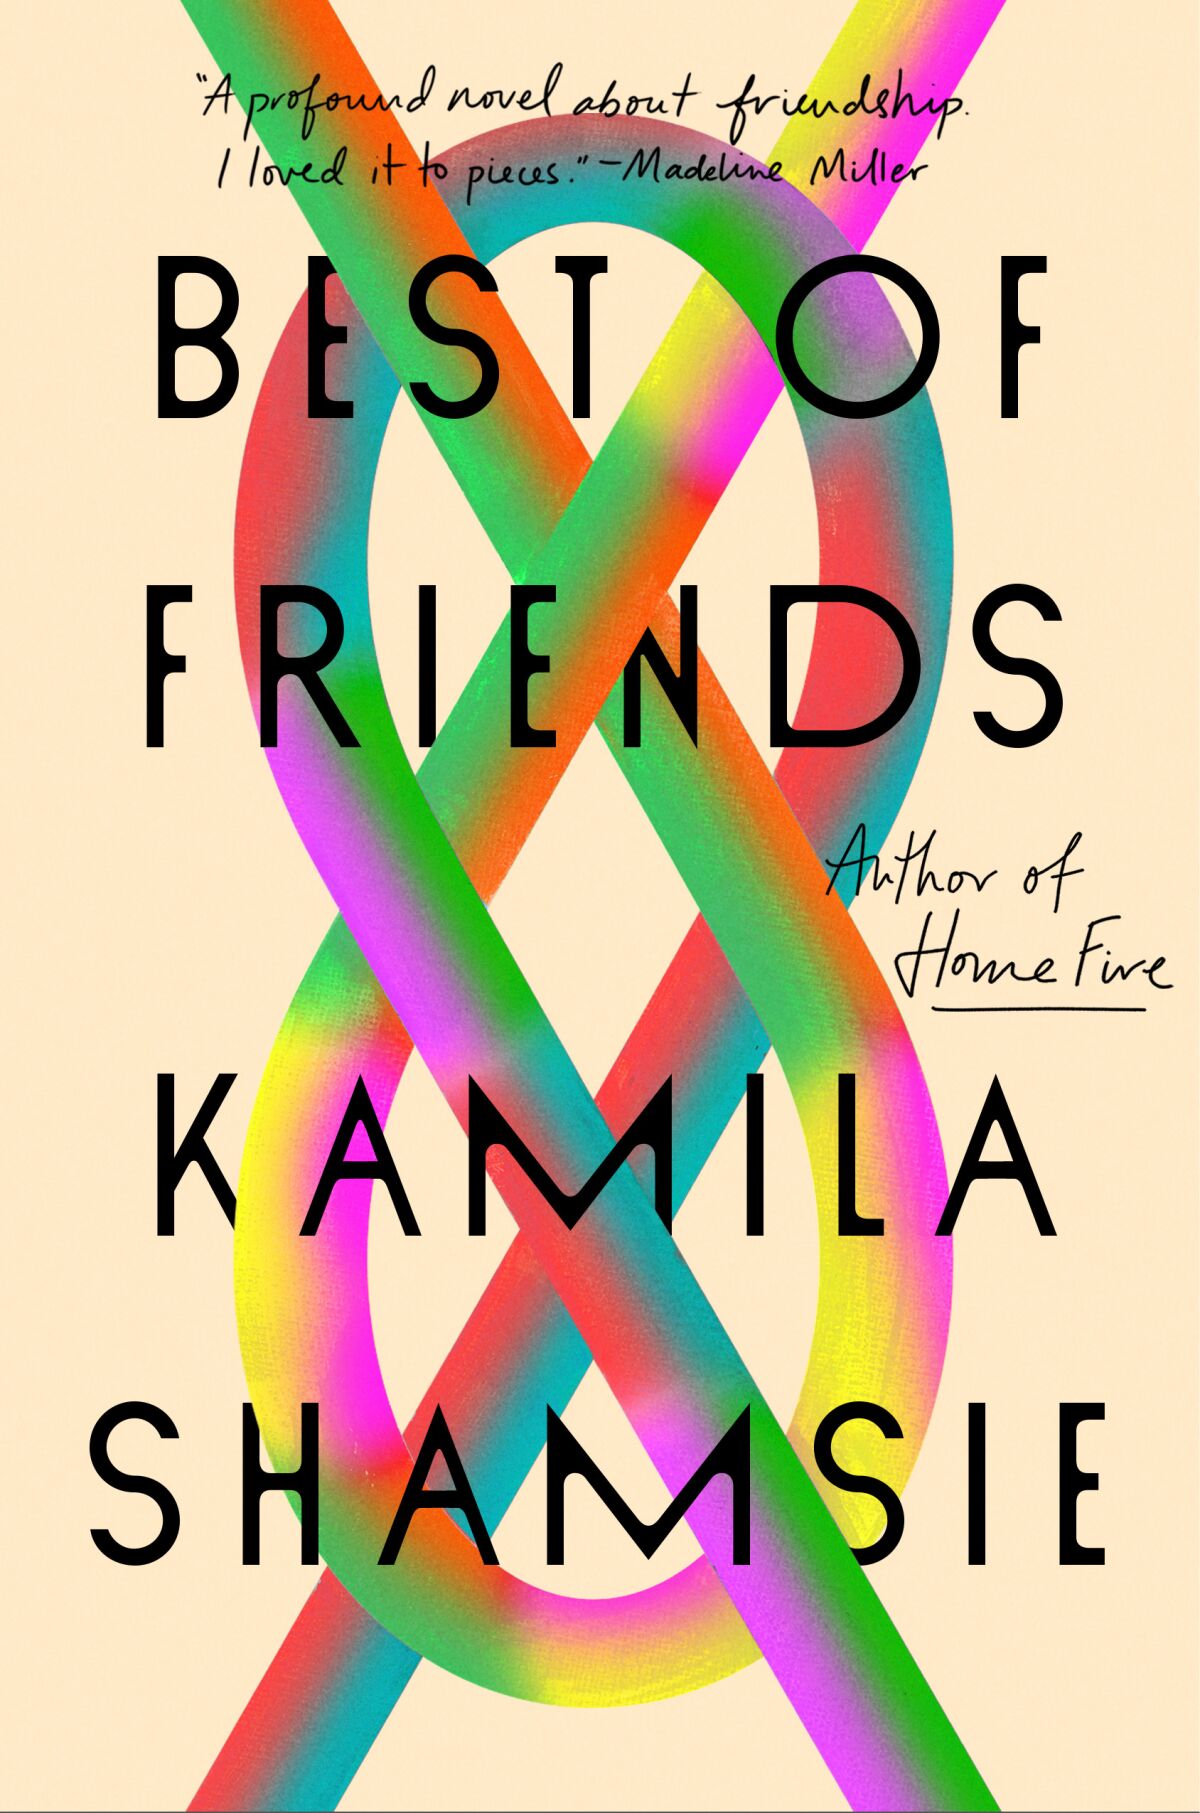 "Best friends," by Kamla Shamsie